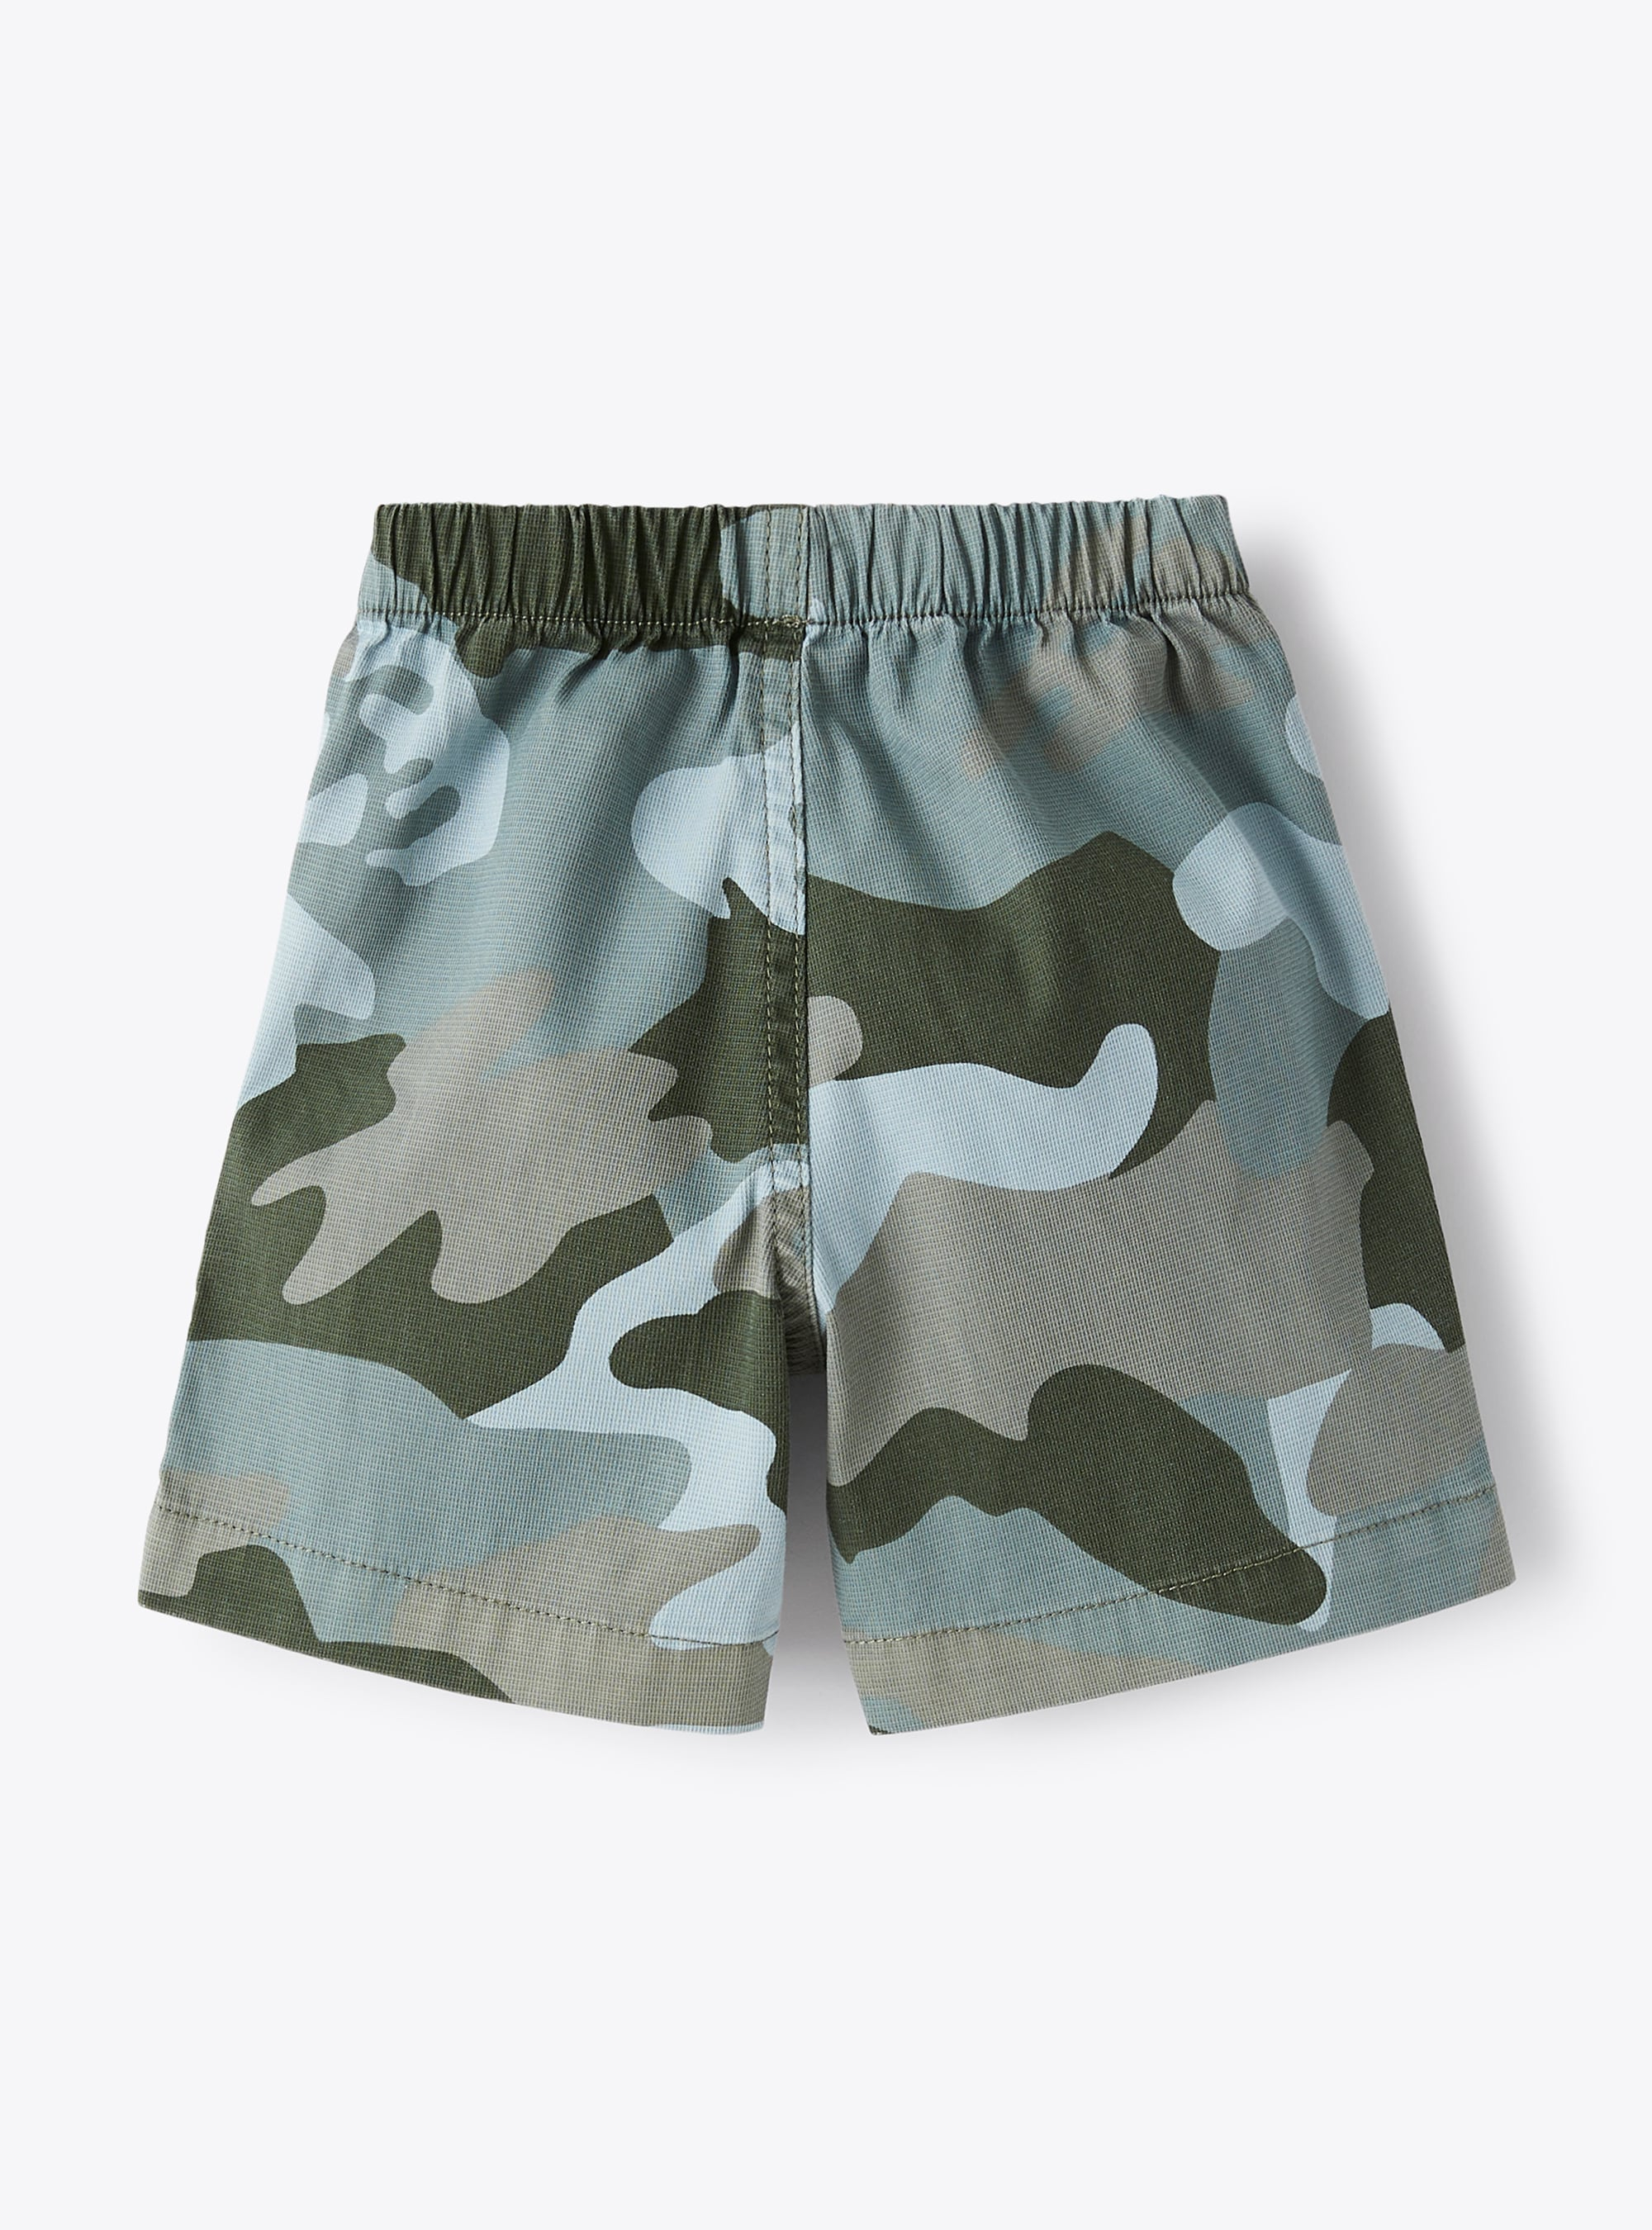 Bermuda shorts in a camouflage pattern - Light blue | Il Gufo